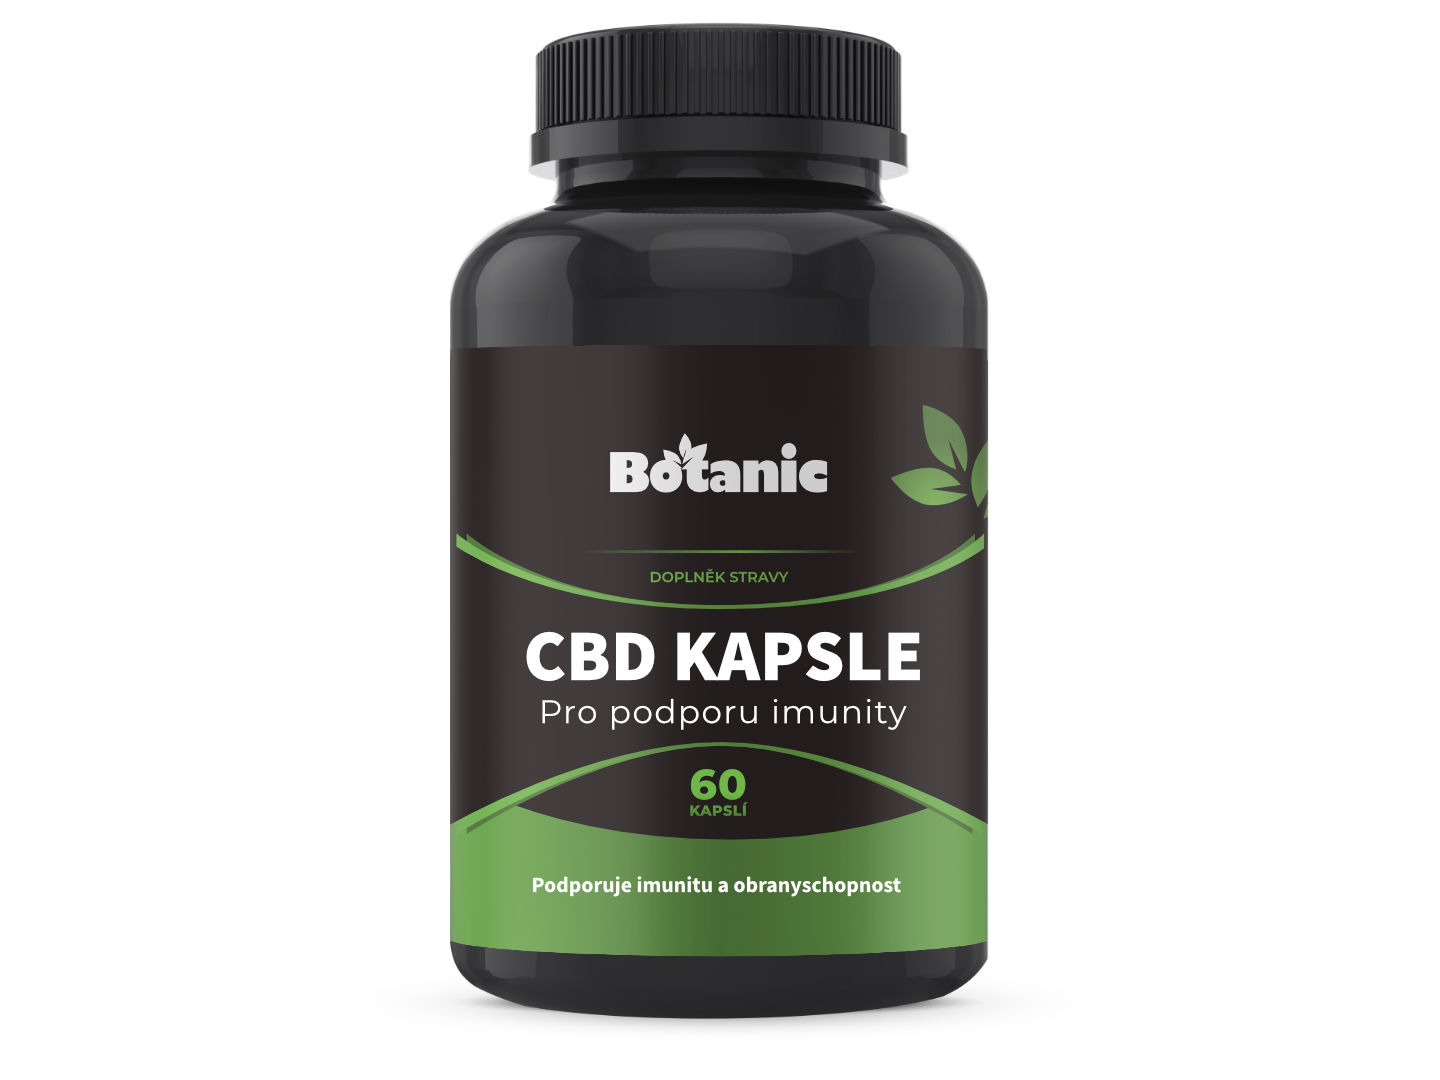 Botanic CBD Kapsle - Pro podporu imunity 60kap.